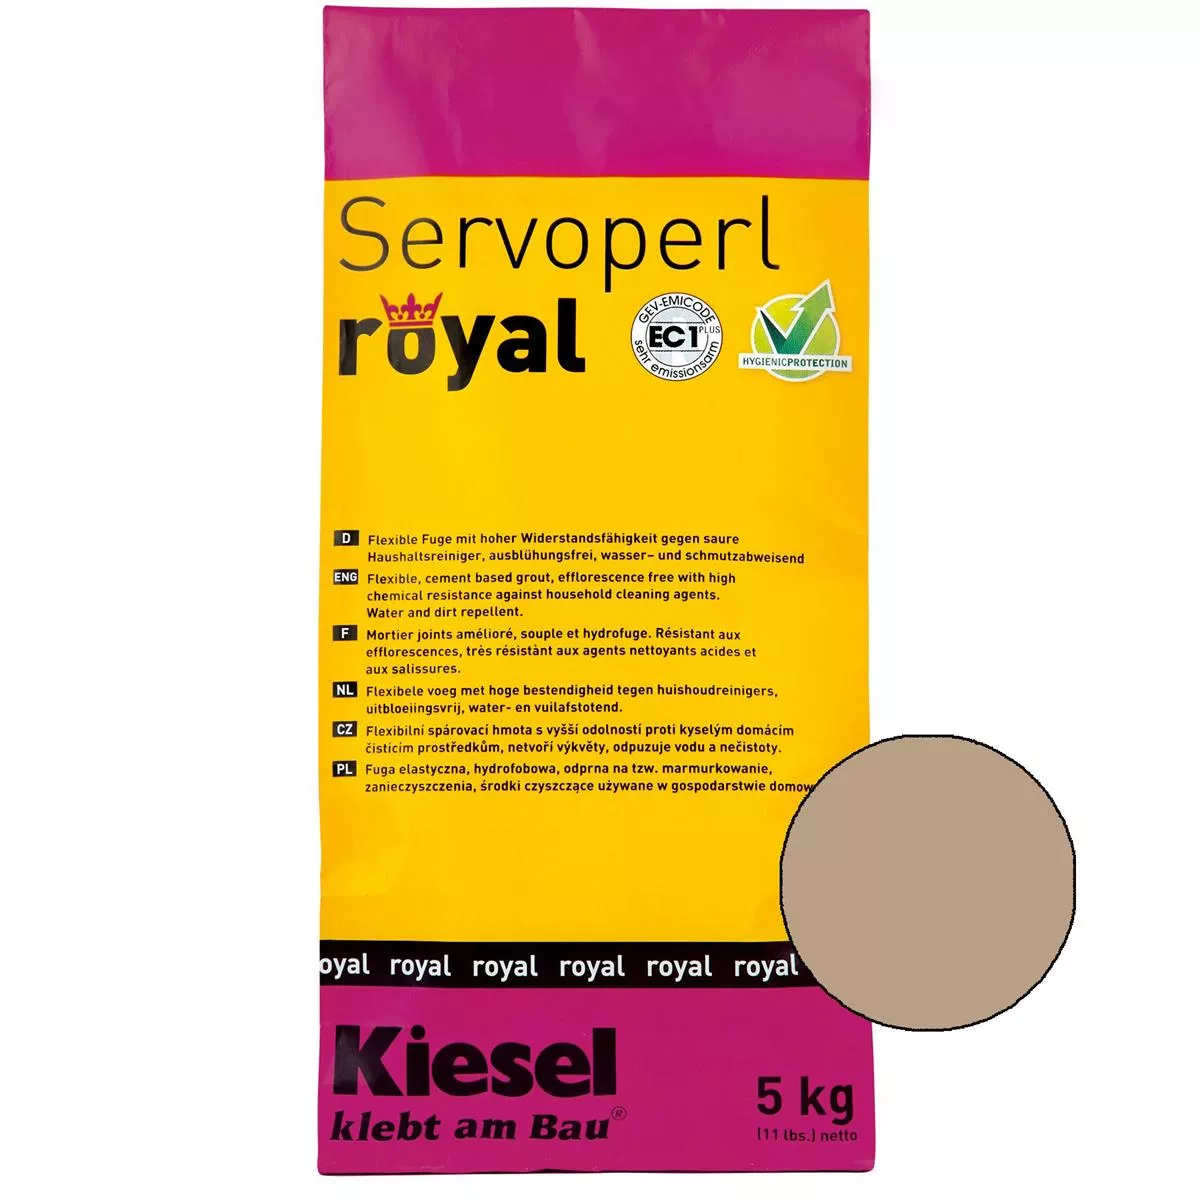 Kiesel Servoperl royal - Fugenmasse - 5 Kg Desert Sand